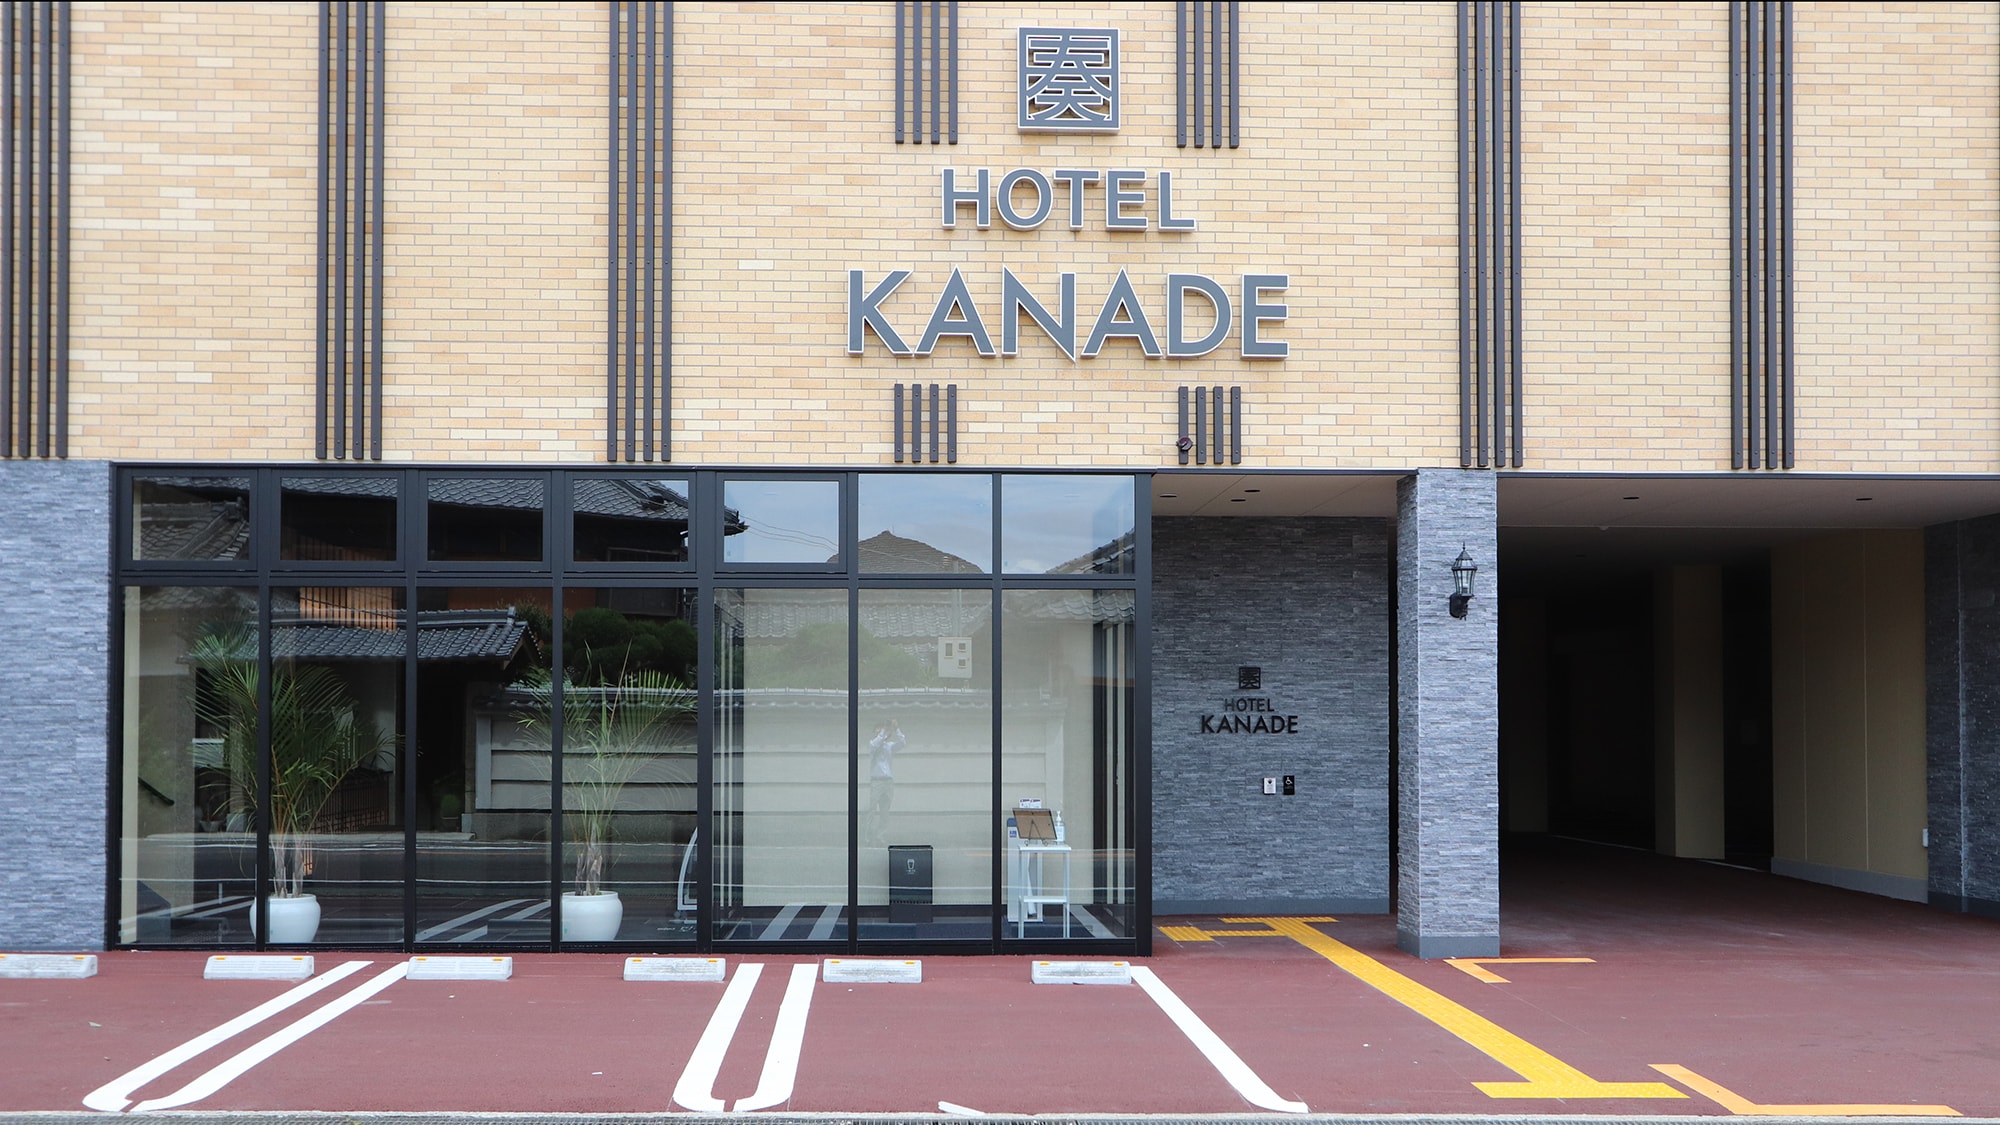 HOTEL KANADE Kanku Shell Mound 將於 2020 年 6 月 5 日（星期五）開業♪